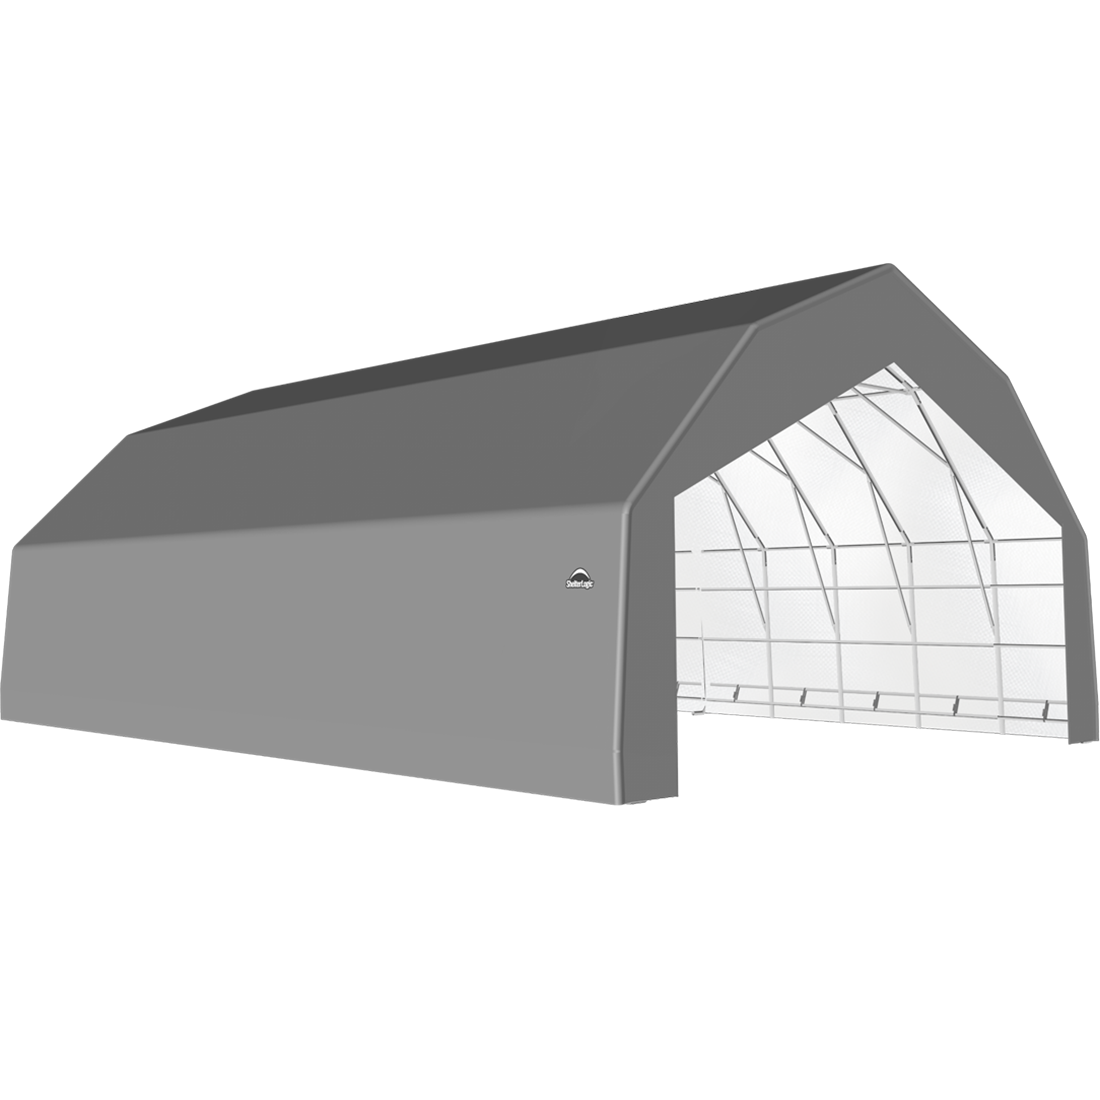 ShelterTech SP Series Barn Shelter, 30 ft. x 32 ft. x 18 ft. Heavy Duty PVC 14.5 oz. Gray